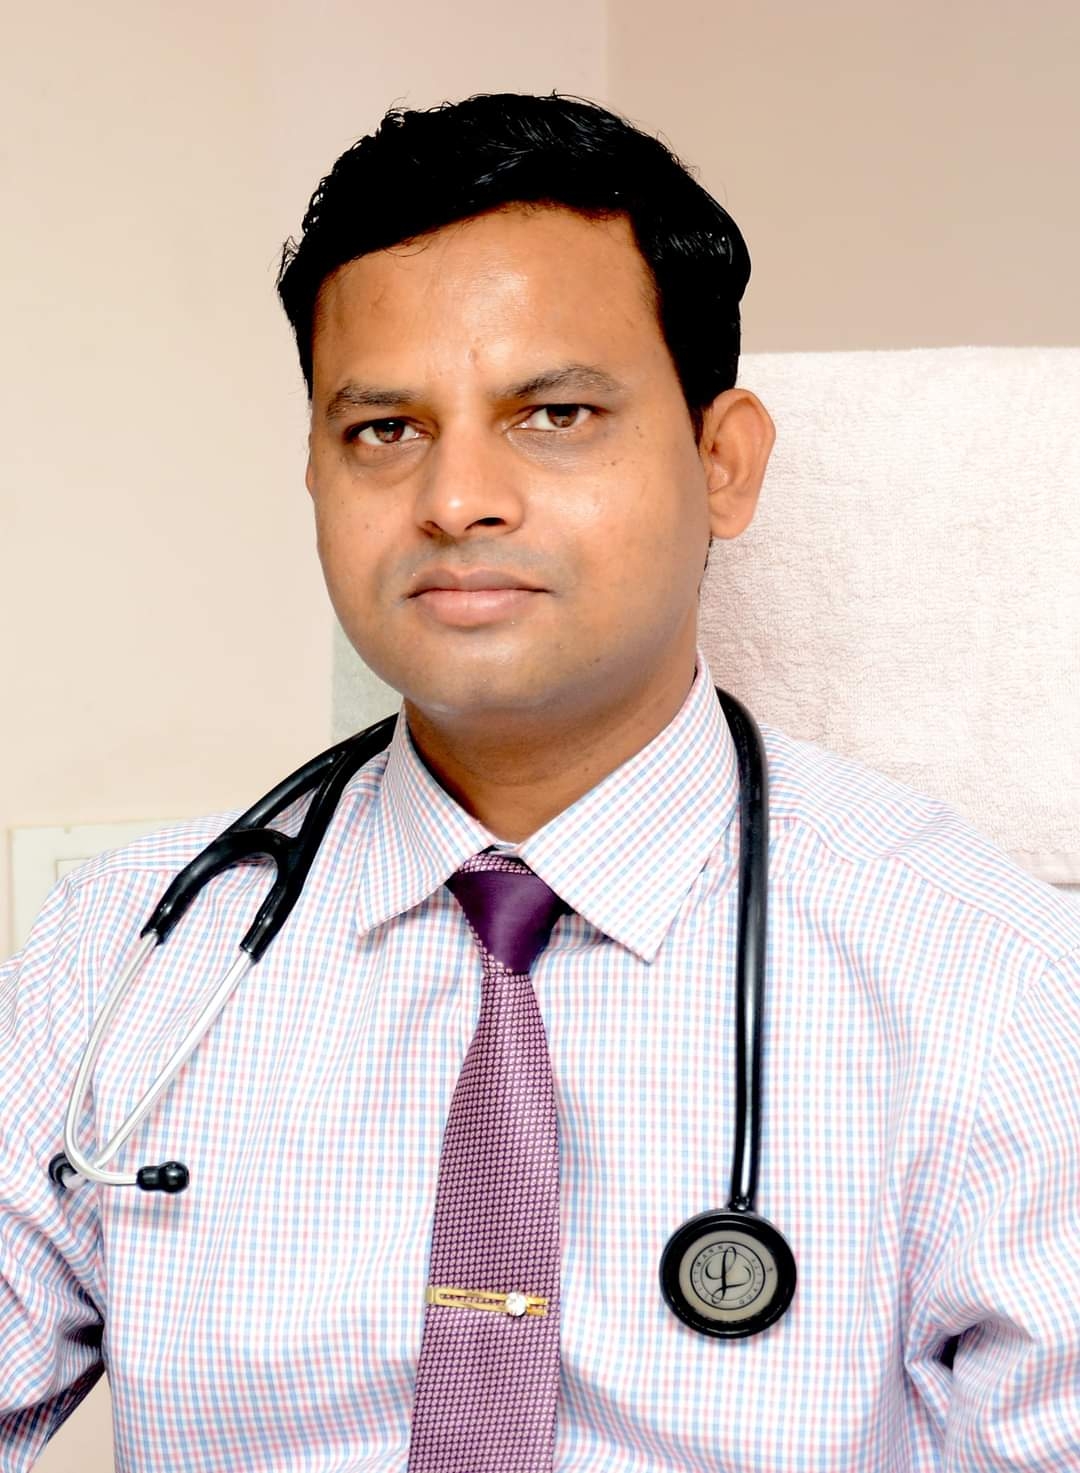 Dr. Pushpraj Patel